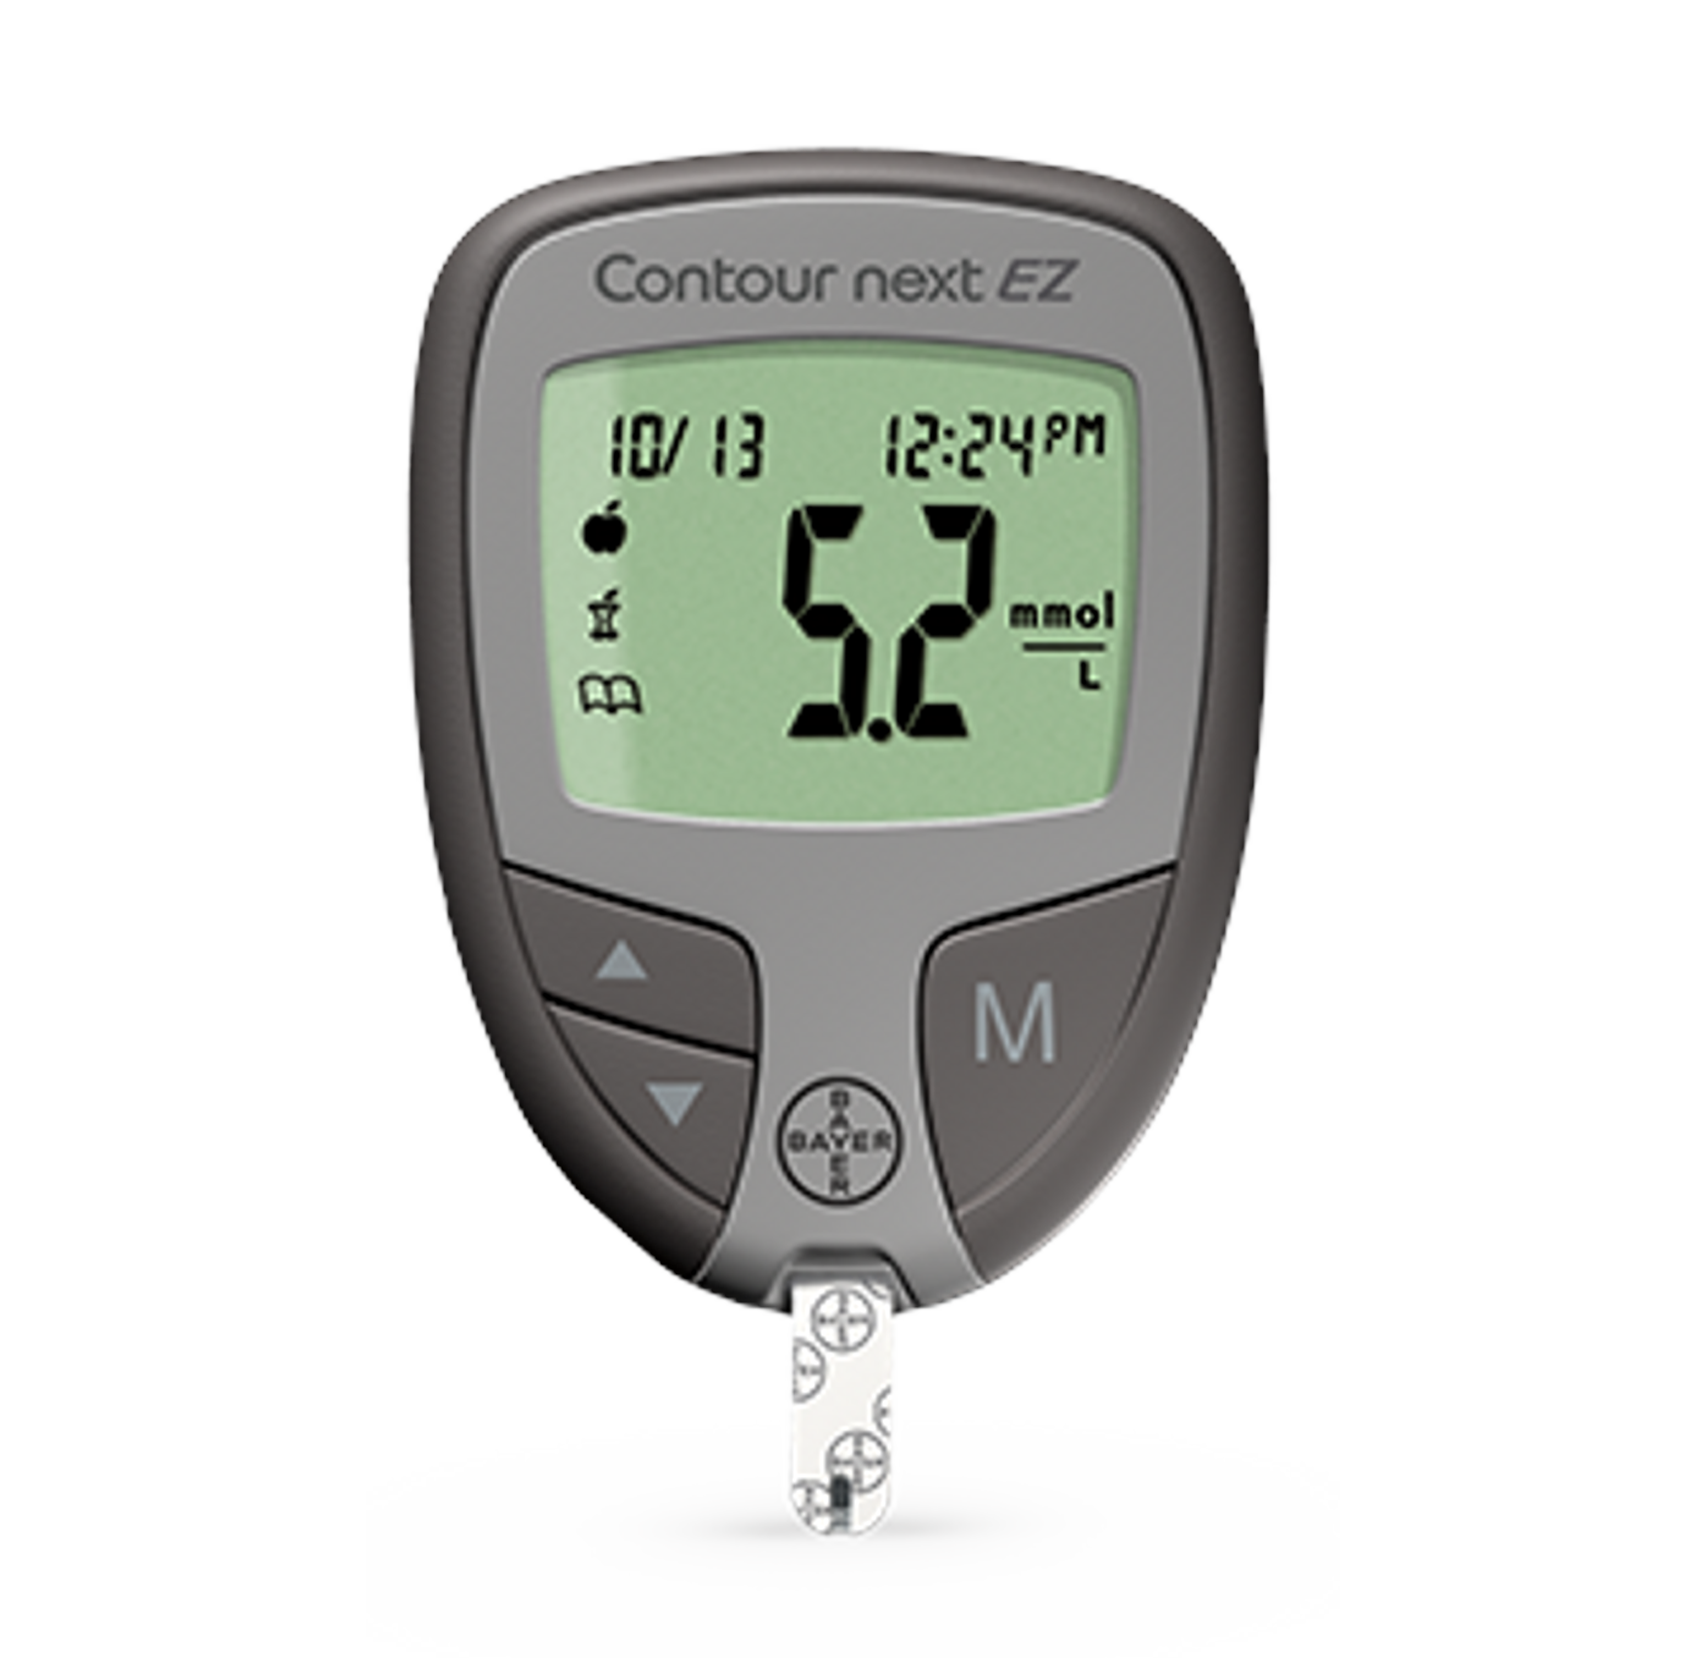 10 Best Glucose Monitors of 2023